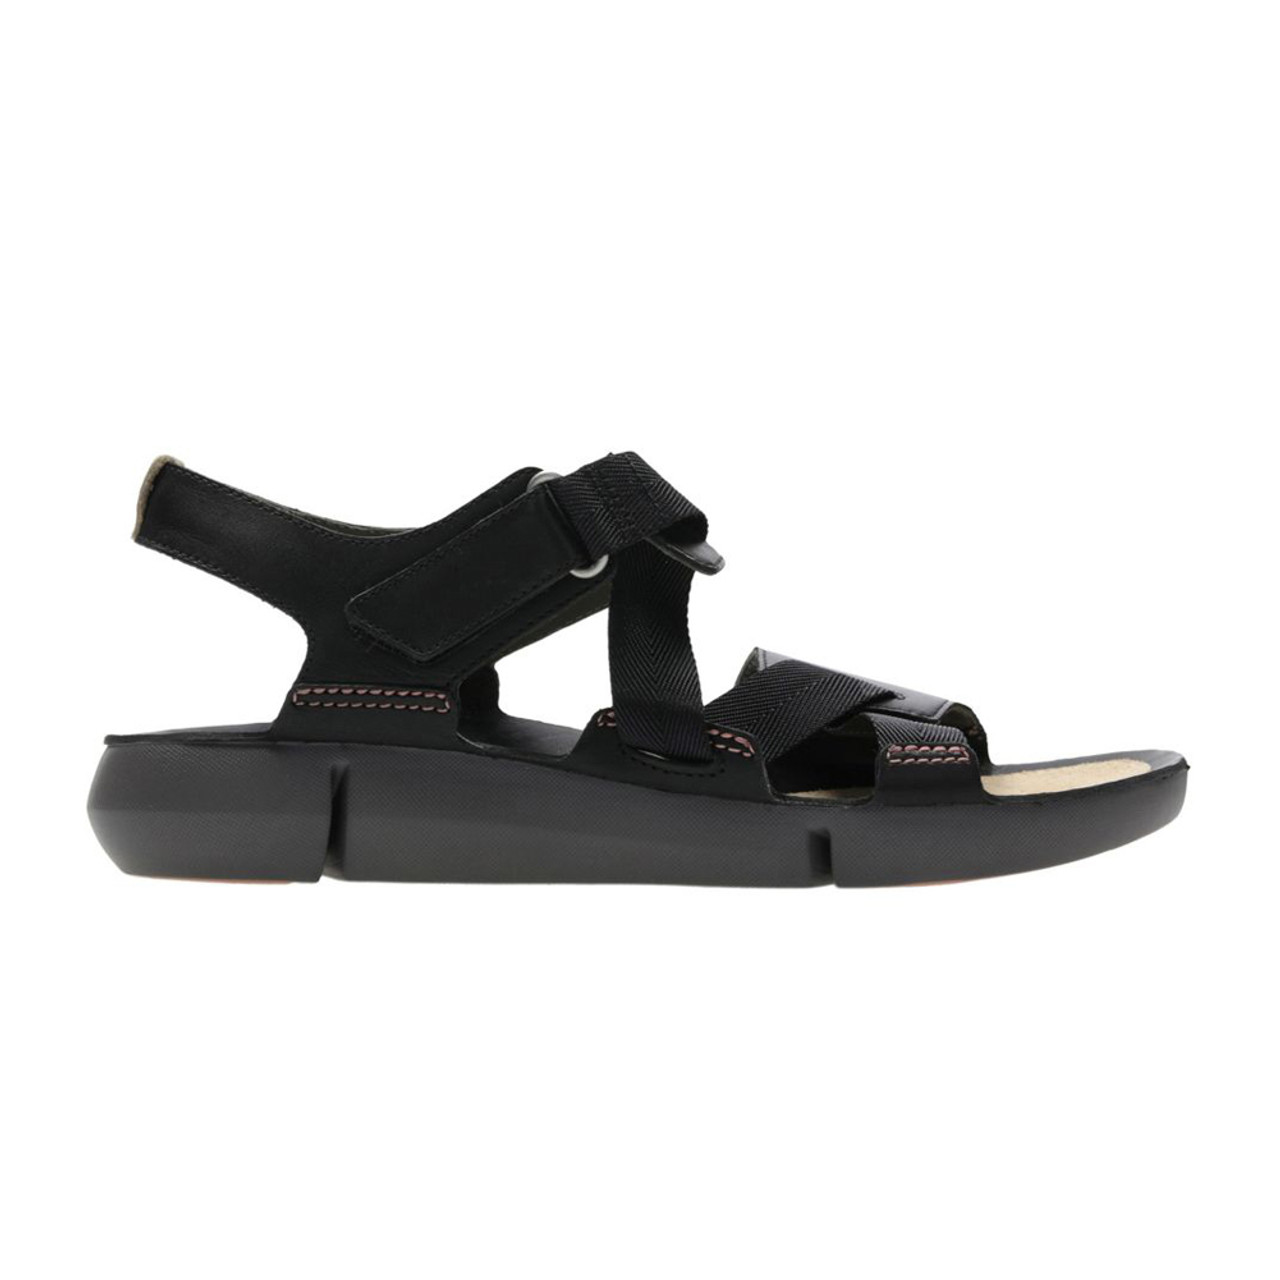 Women's Tri Clover Sandal Black | Discount Ladies Sandals & More Shoolu.com | Shoolu.com